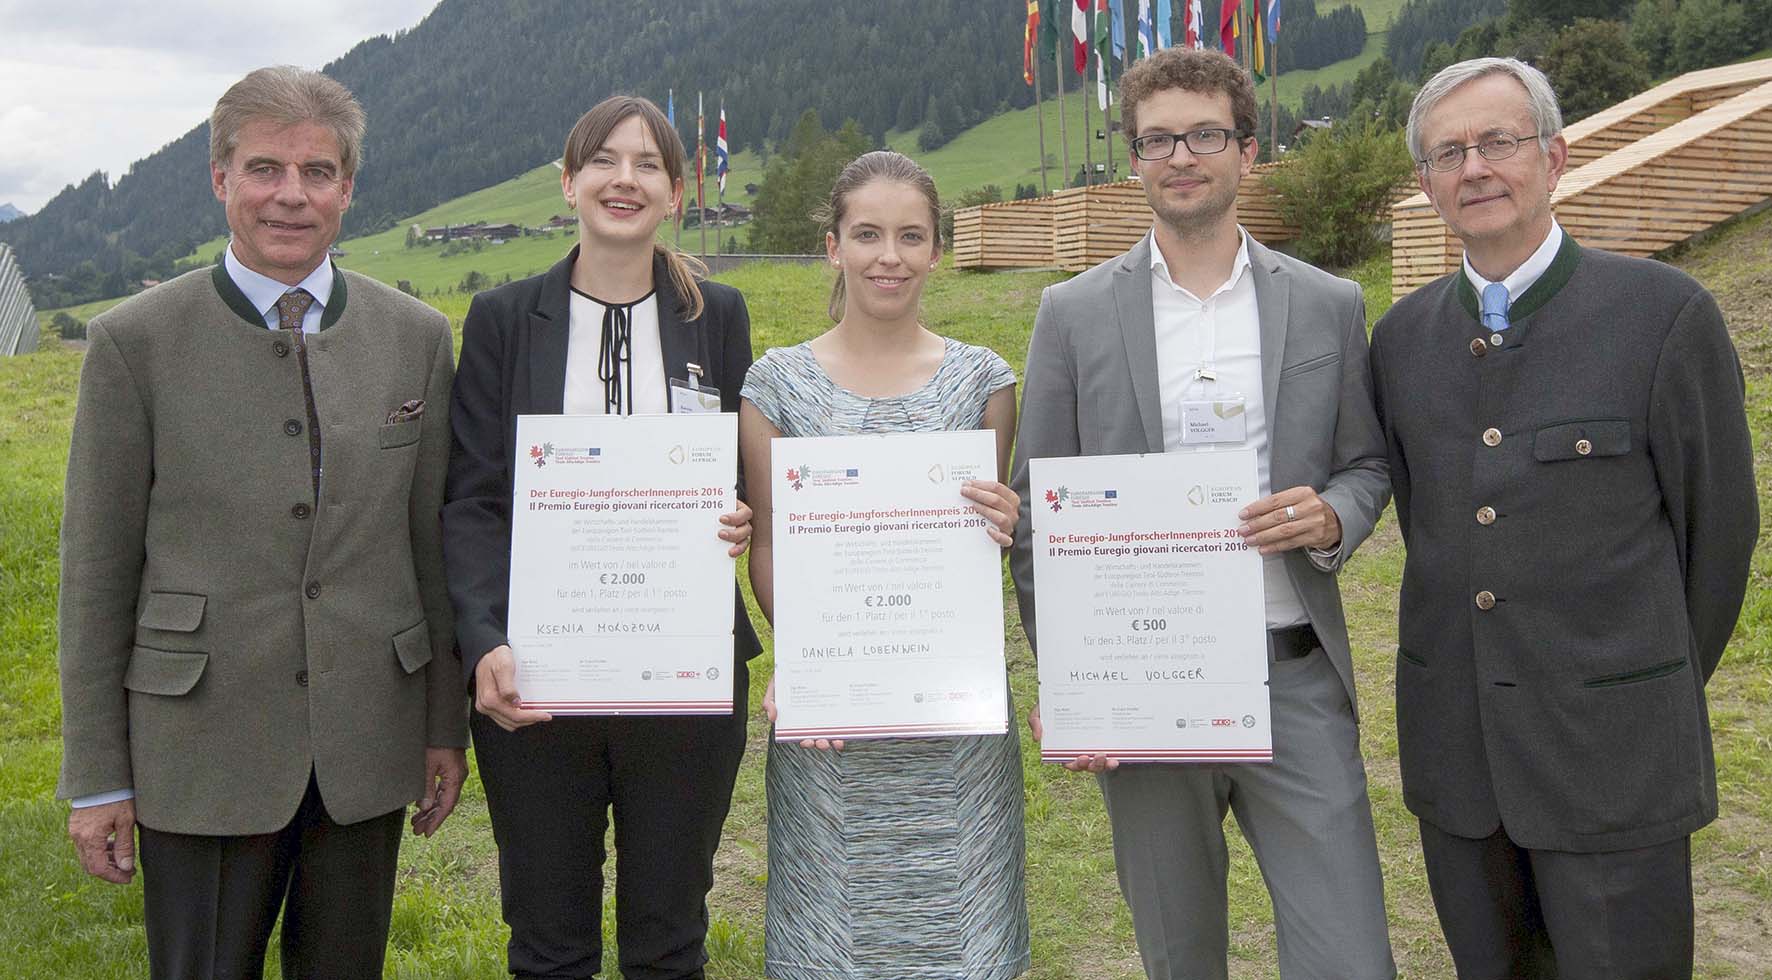 Giovani ricercatori euregio vincitori 2016 Presidente LUB Konrad Bergmeister le vincitrici Ksenia Morozova e Daniela Lobenwein il 3 Michael Volgger Michl Ebner